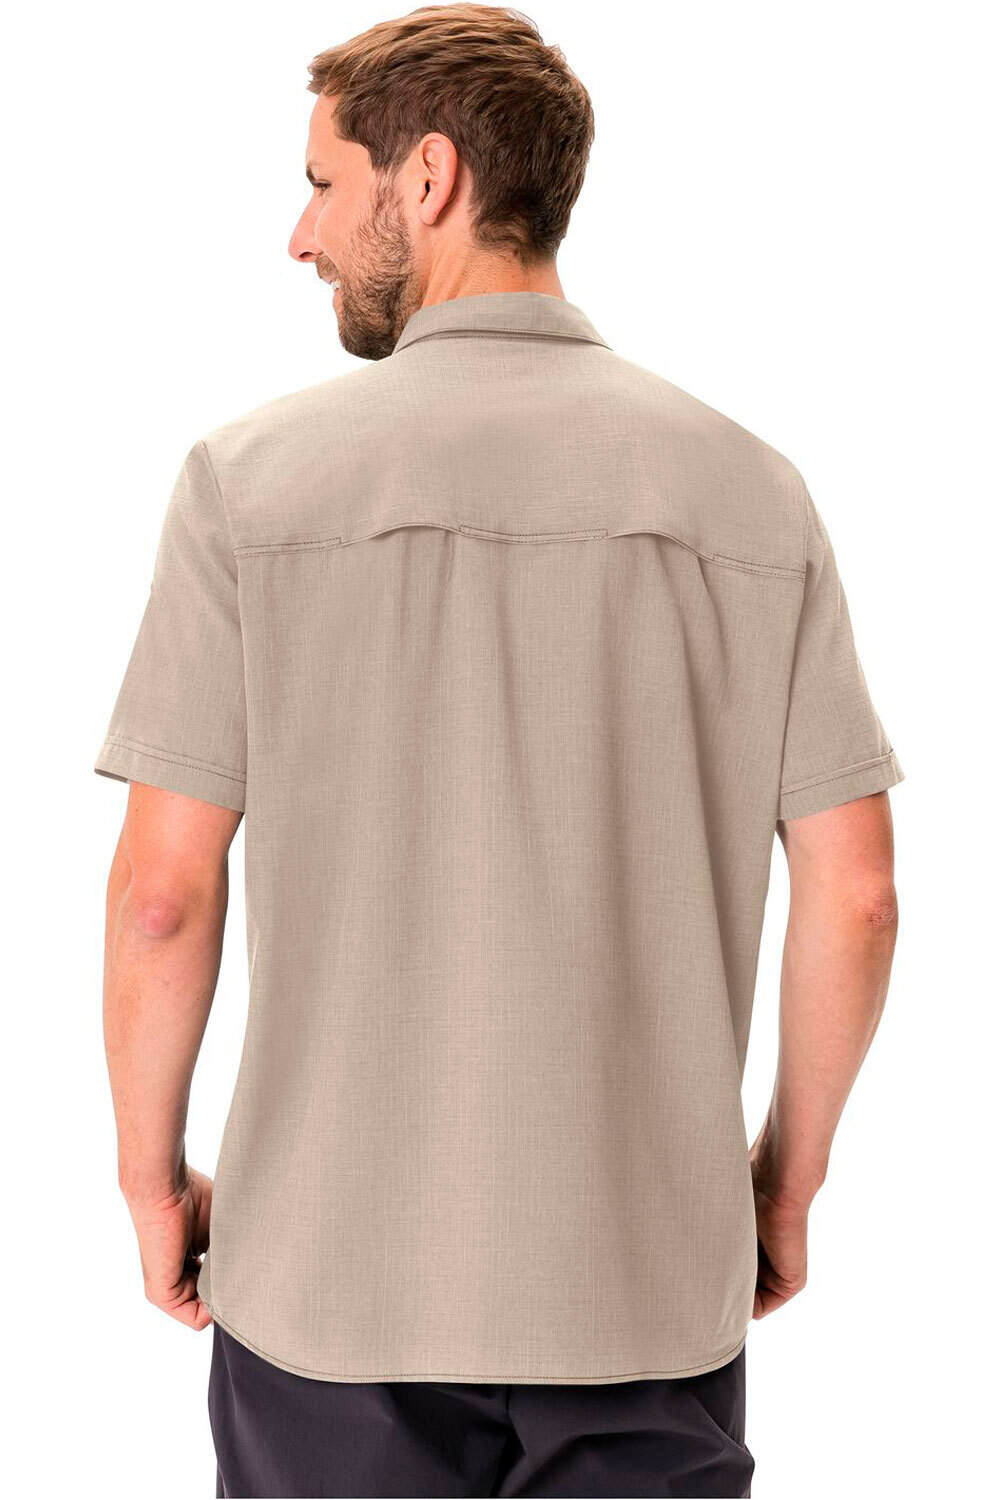 Vaude camisa montaña manga corta hombre Men's Rosemoor Shirt II vista trasera